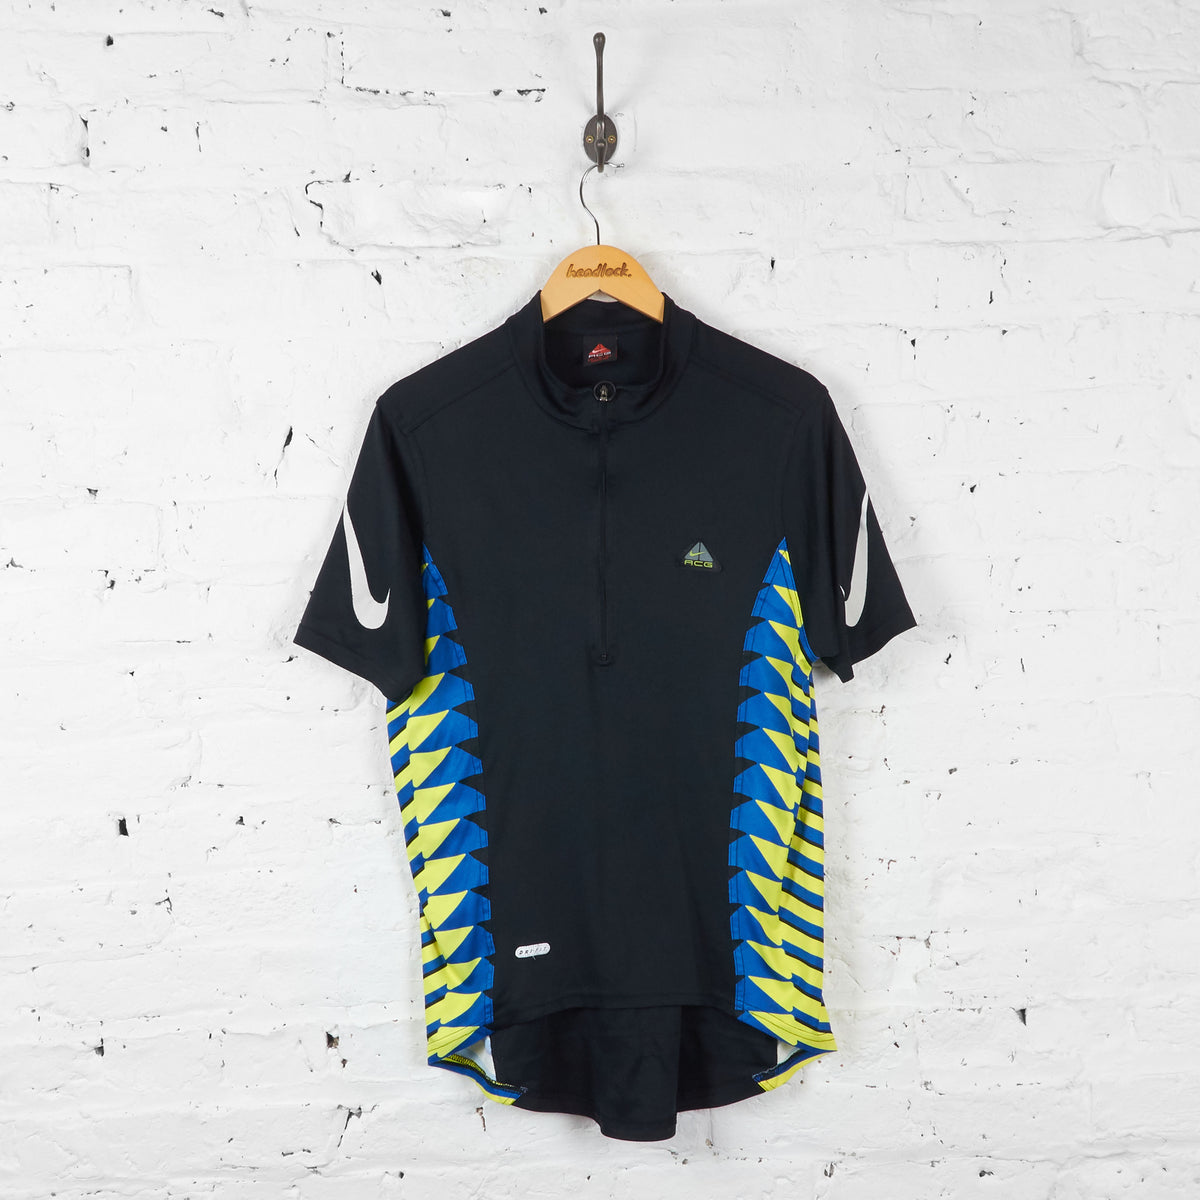 Nike ACG Pattern Cycling Top Jersey - Black - XL – Headlock